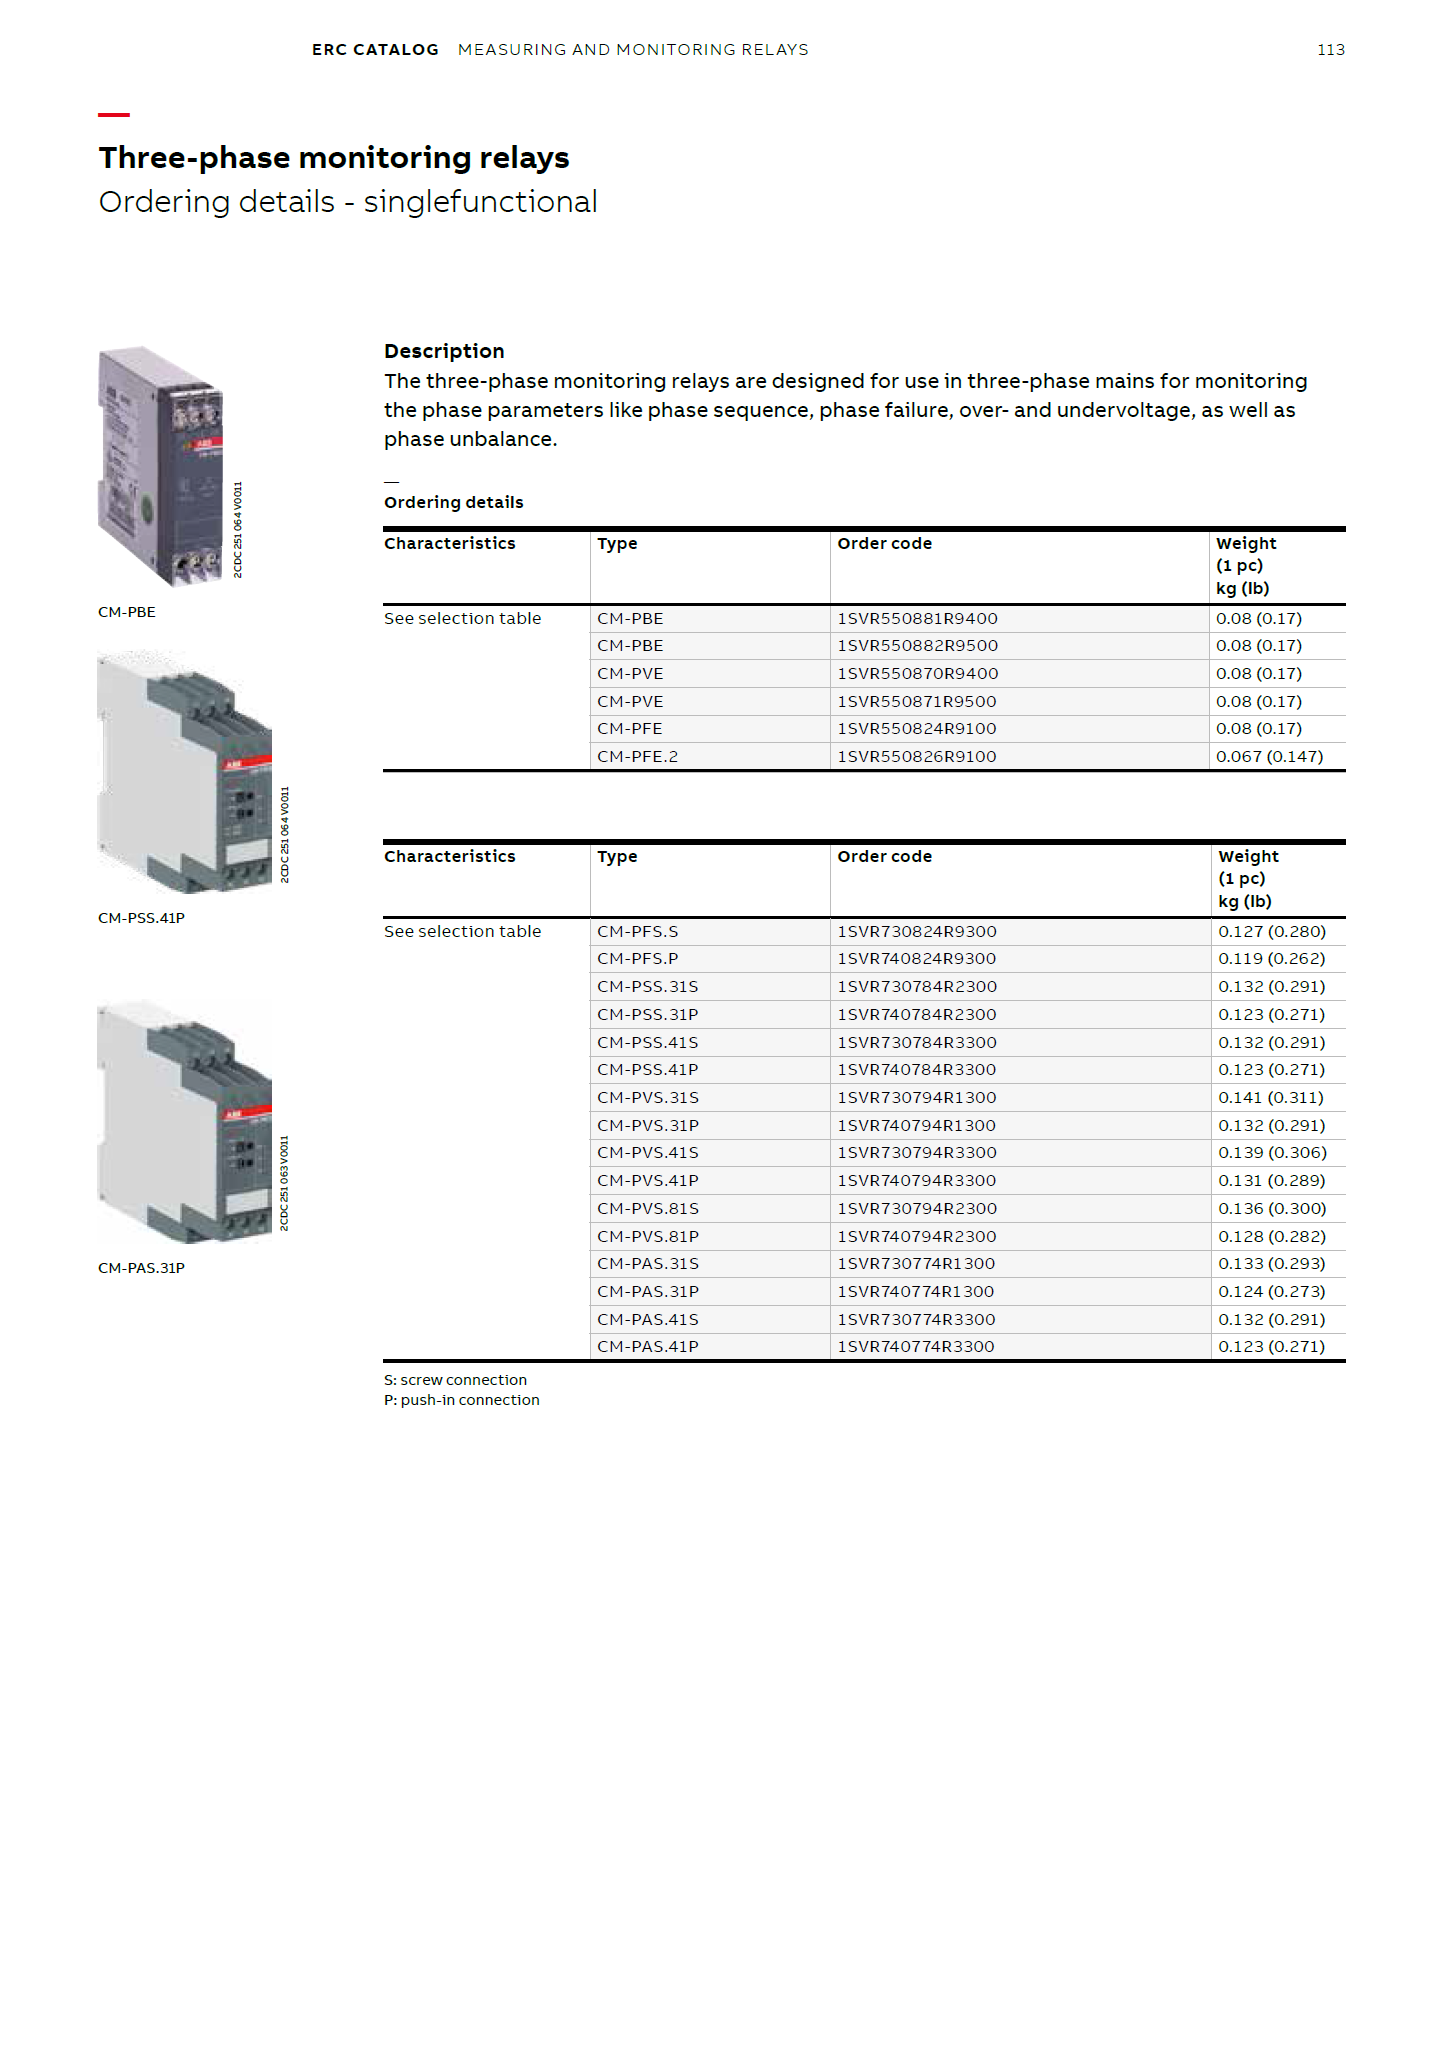 ABB insulation Monitoring Relay CM-IWS.1S 1SVR730660R0100